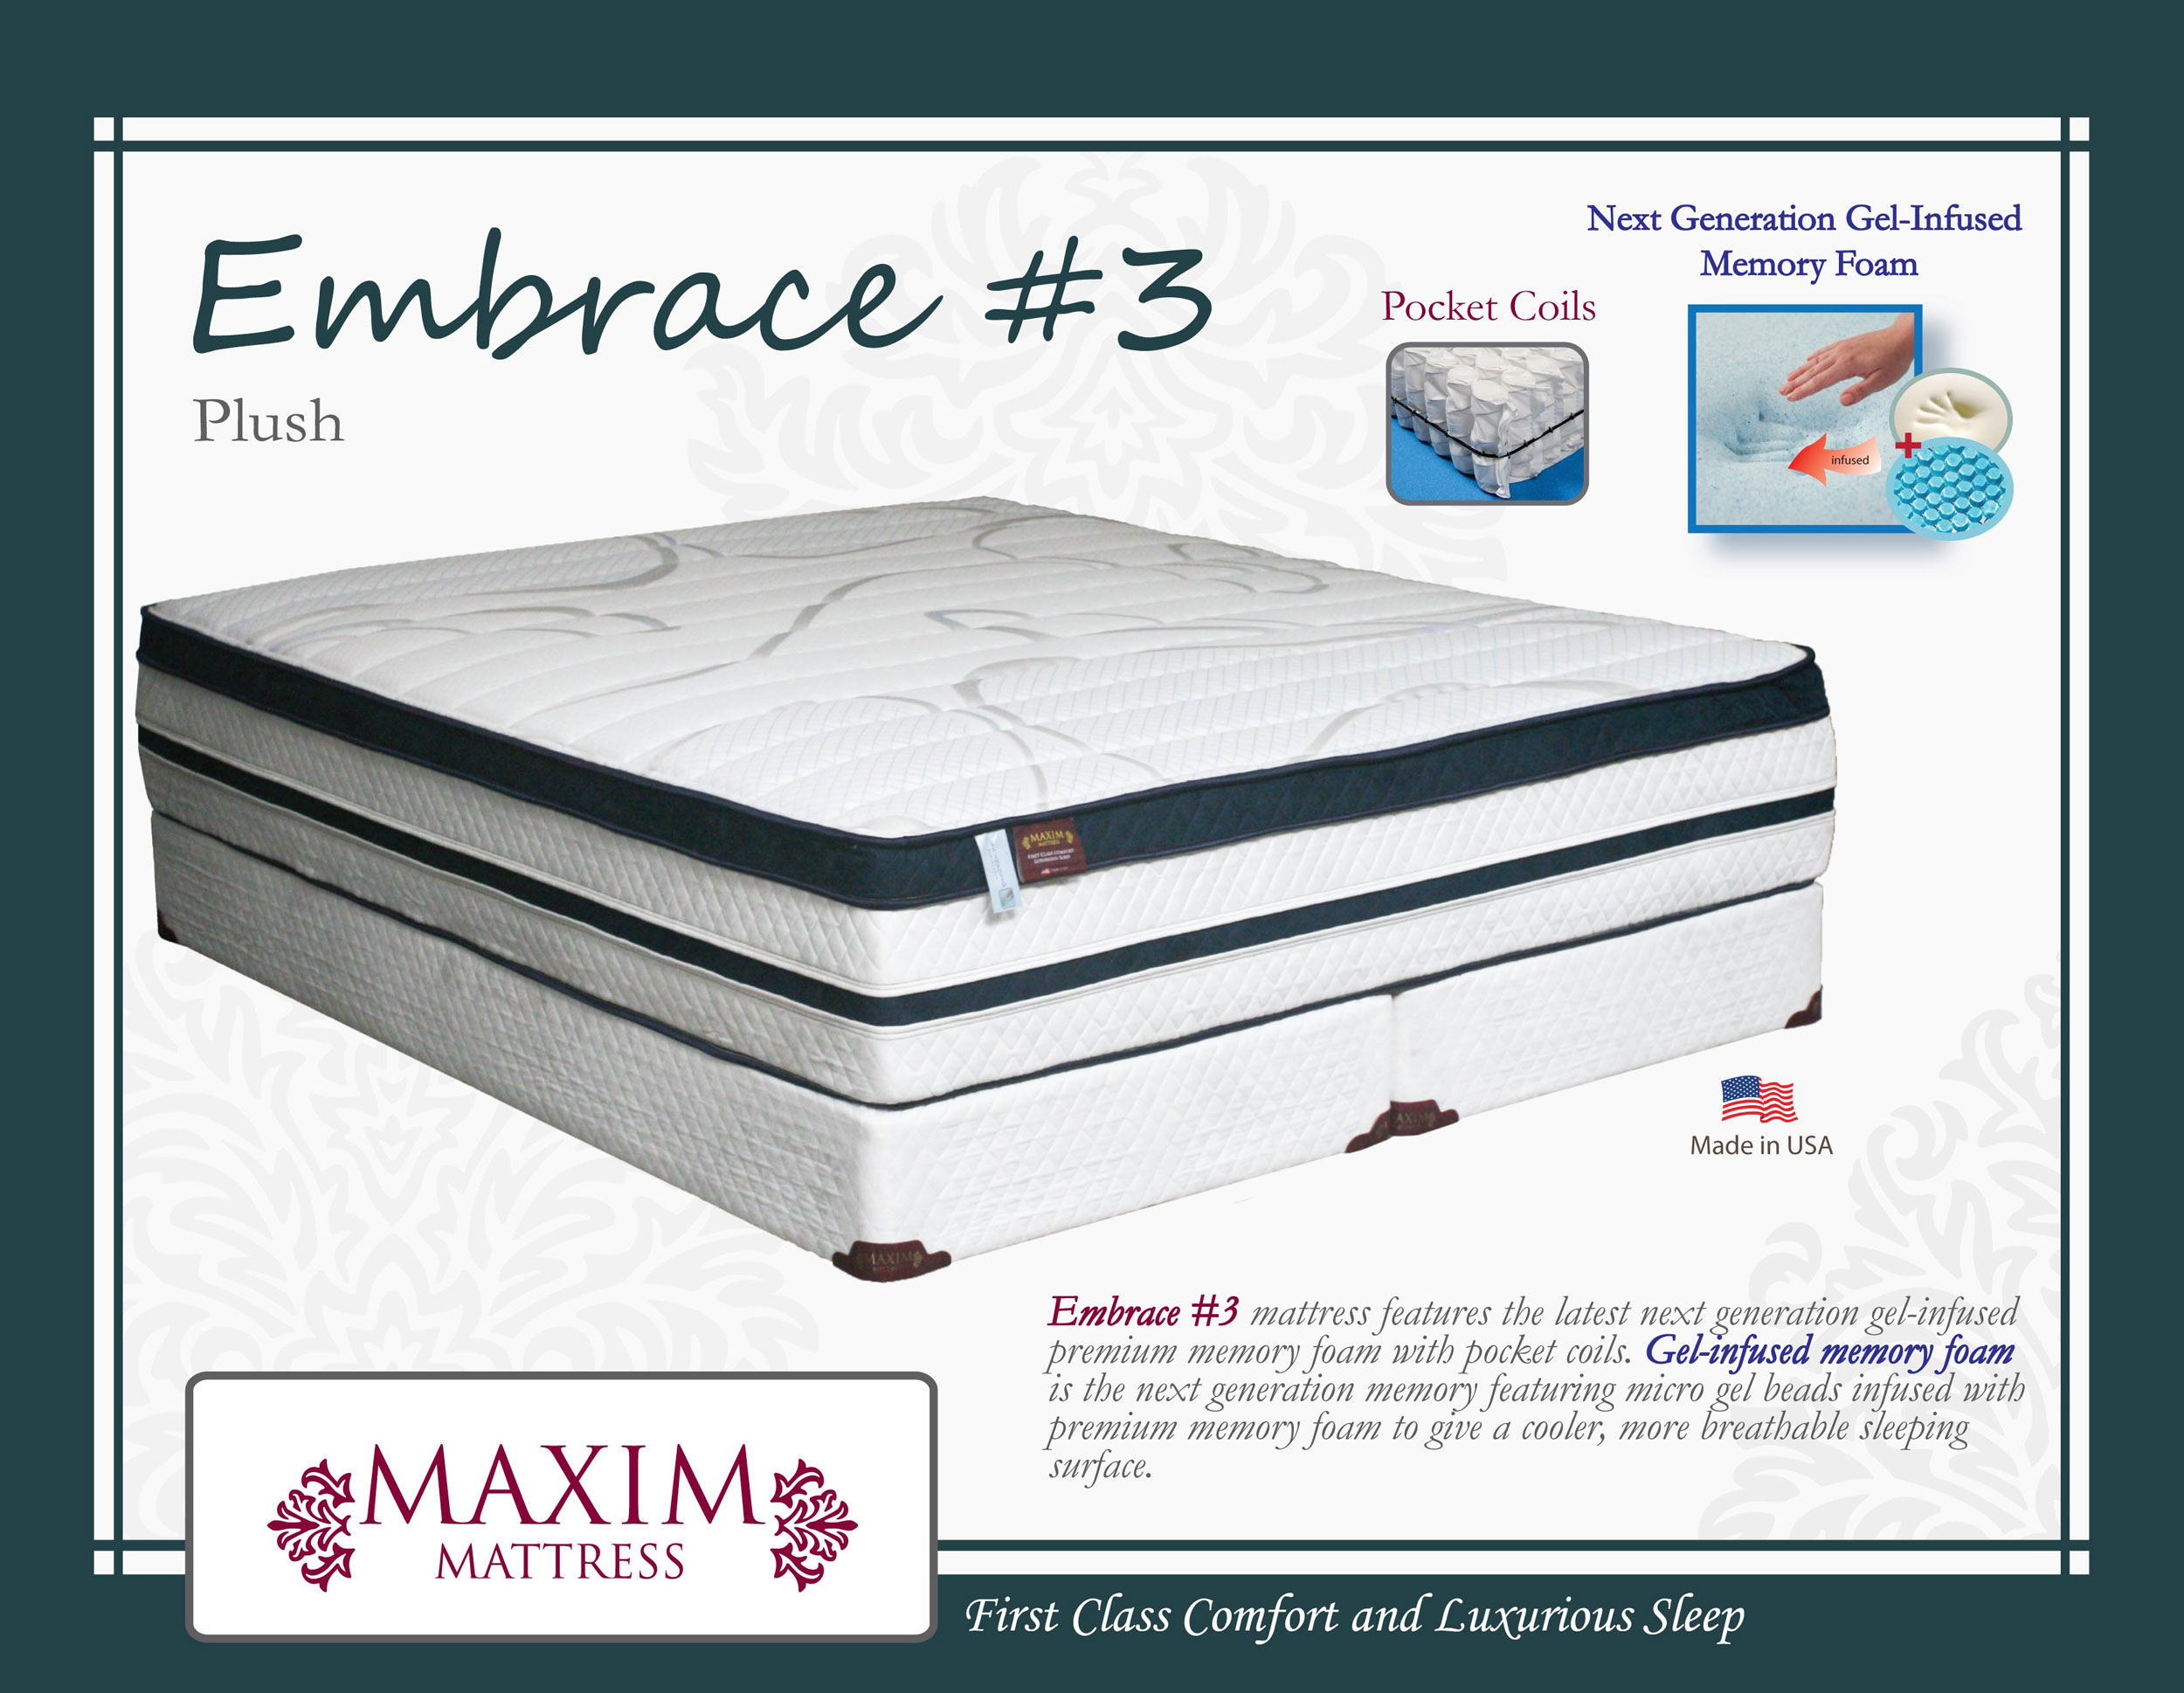 healthy back embrace mattress reviews